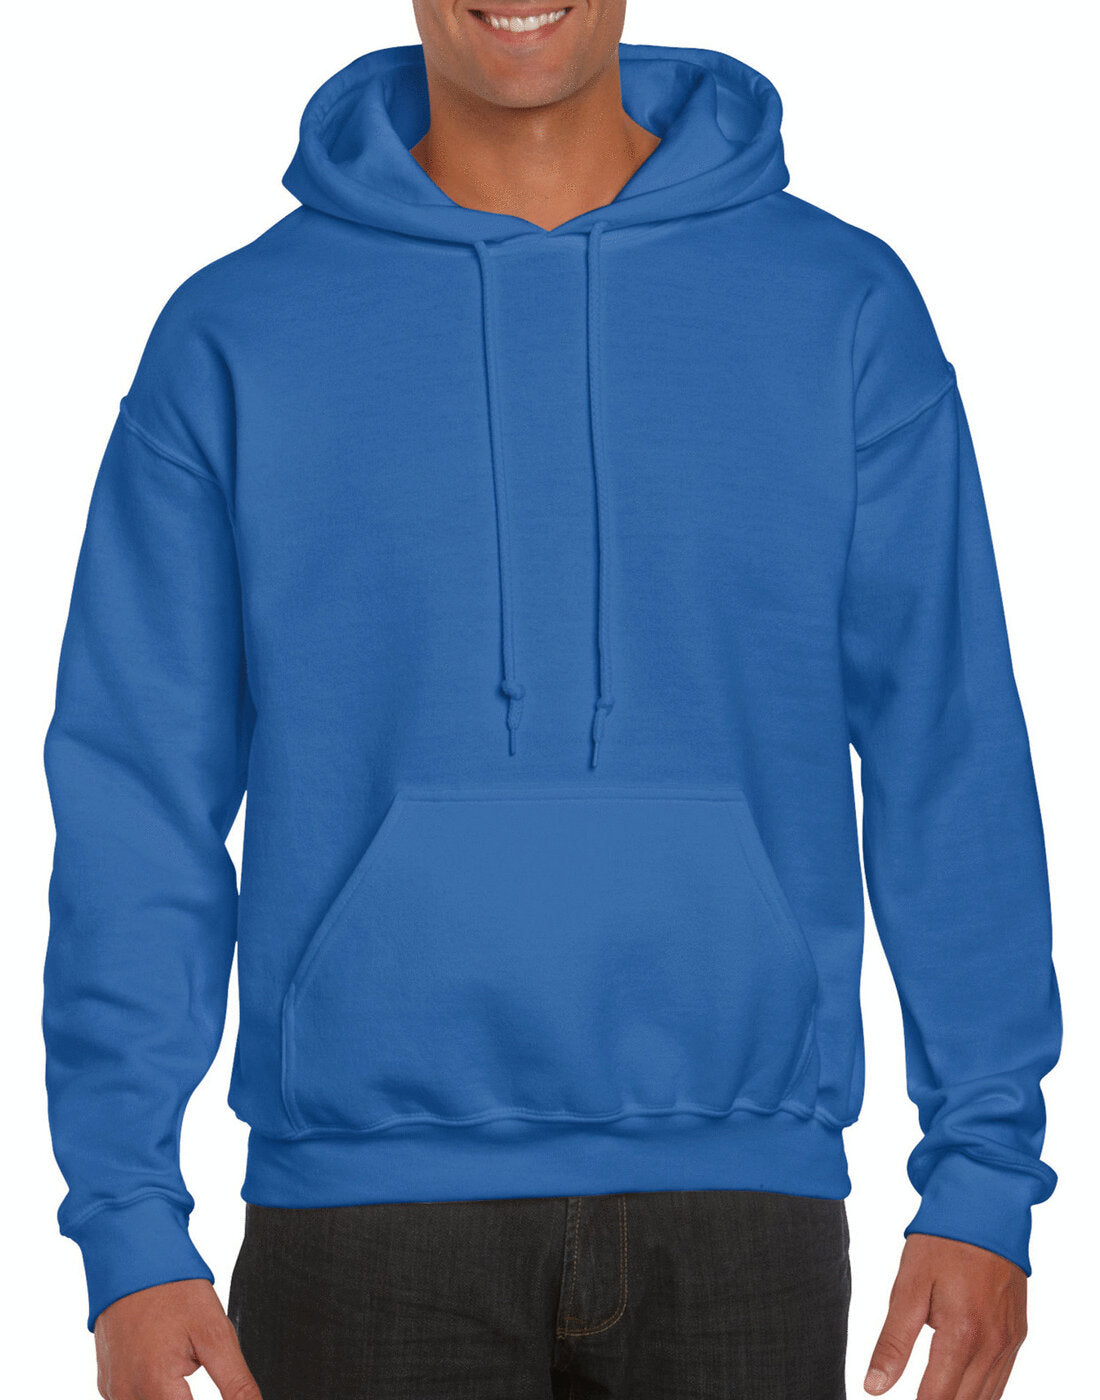 Gildan Dryblend Adult Hooded Sweatshirt - Royal Blue